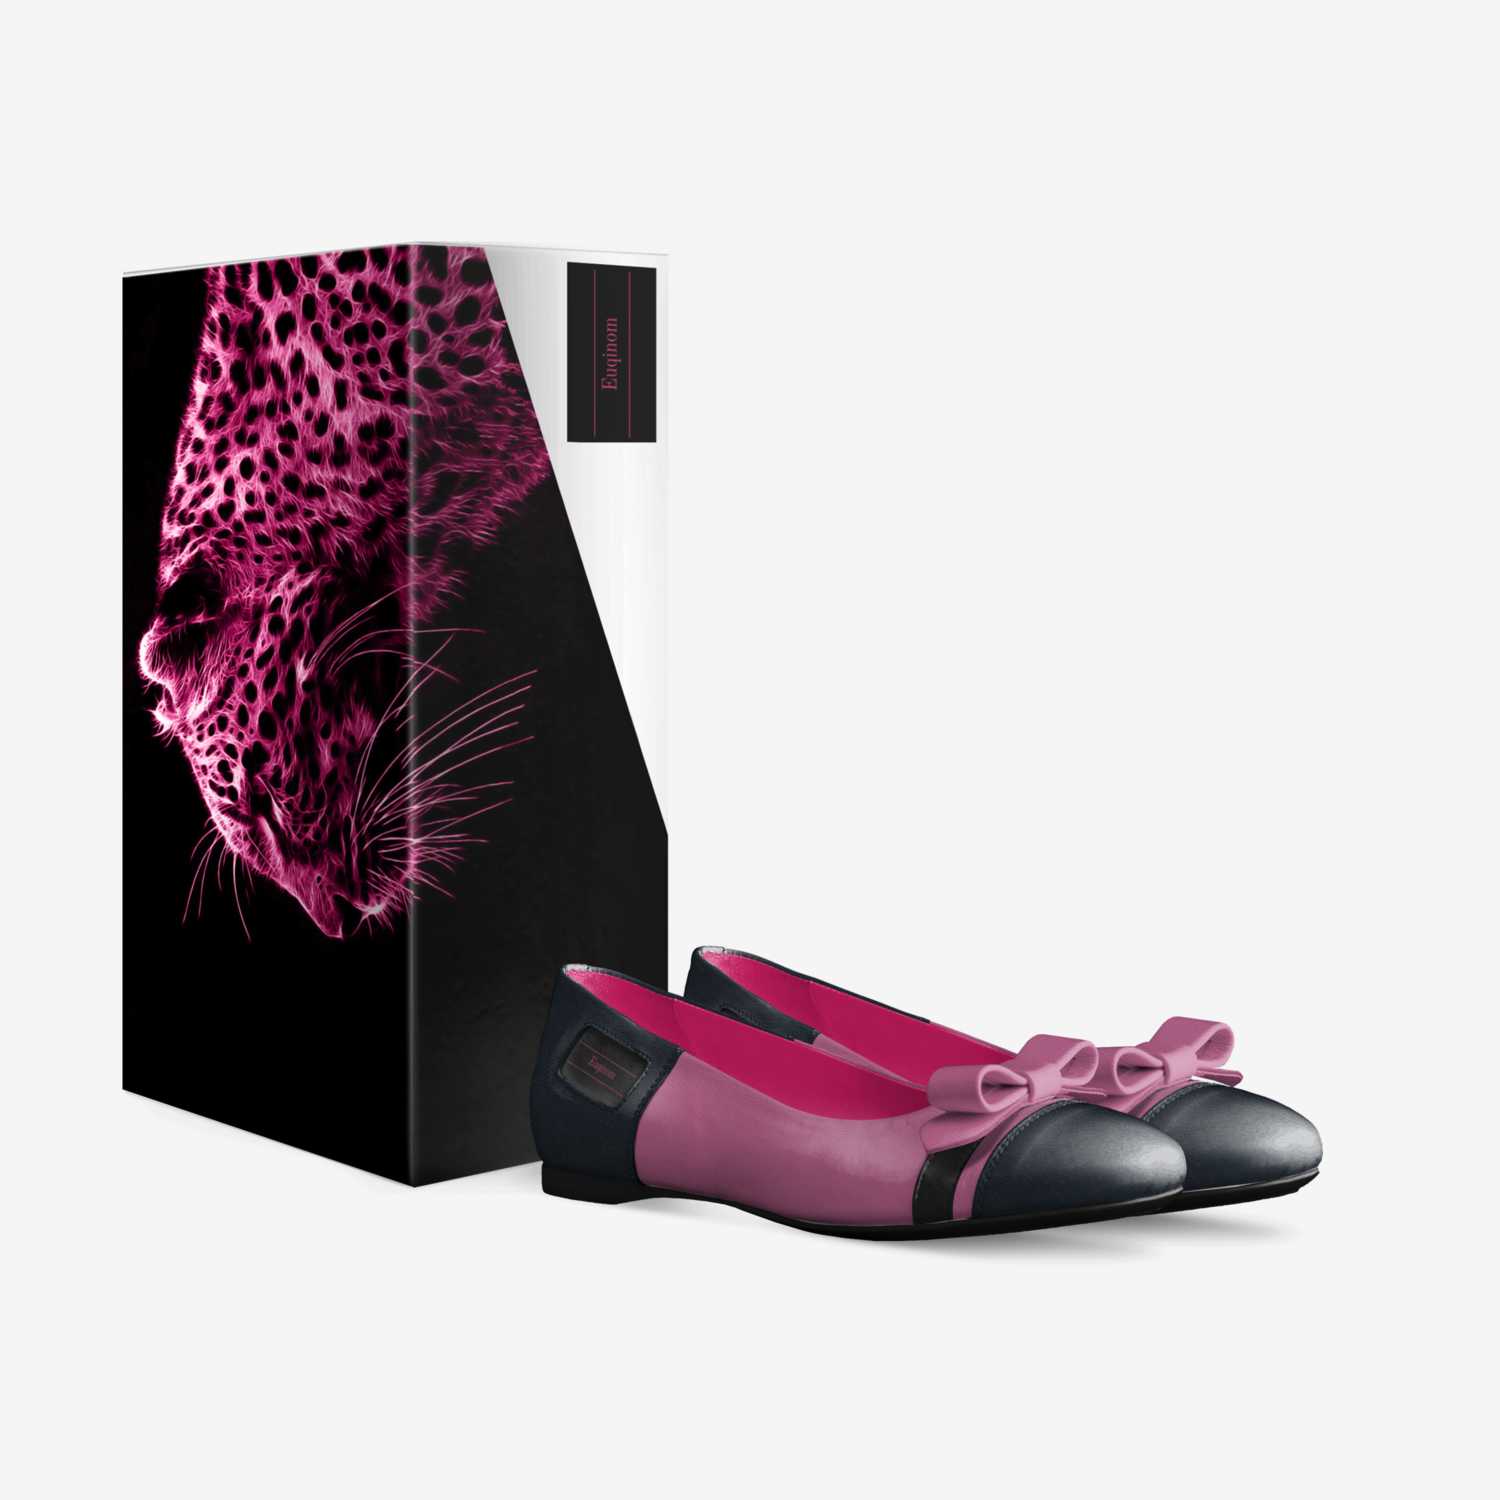 Euqinom custom made in Italy shoes by Monique Burston | Box view